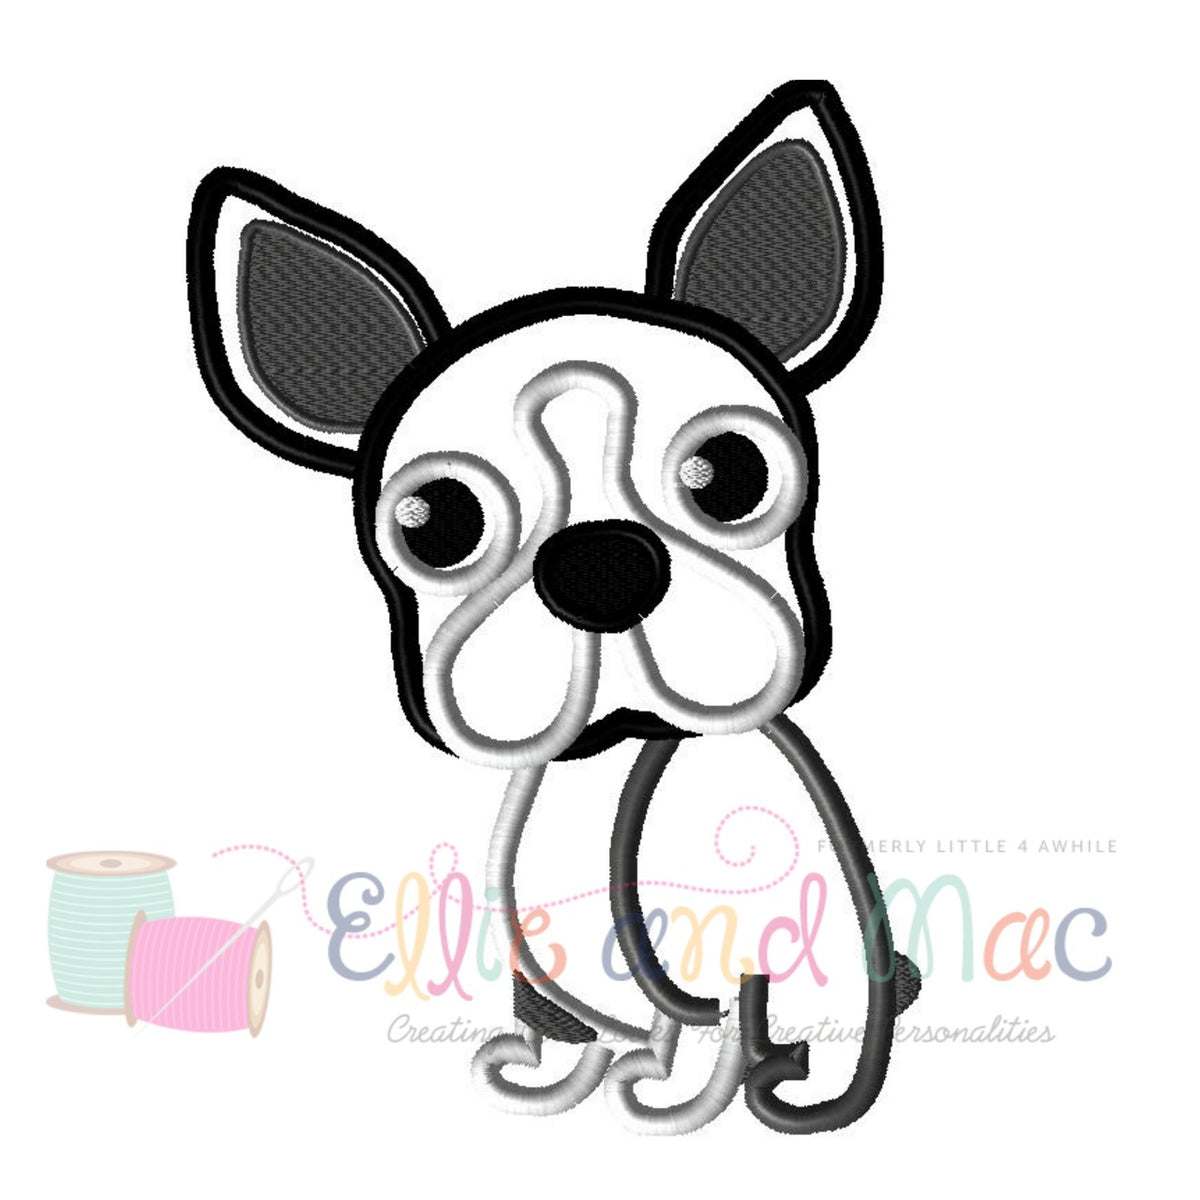 Pampered Boston Terrier Dog Applique Design - Ellie and Mac, Digital (PDF) Sewing Patterns | USA, Canada, UK, Australia